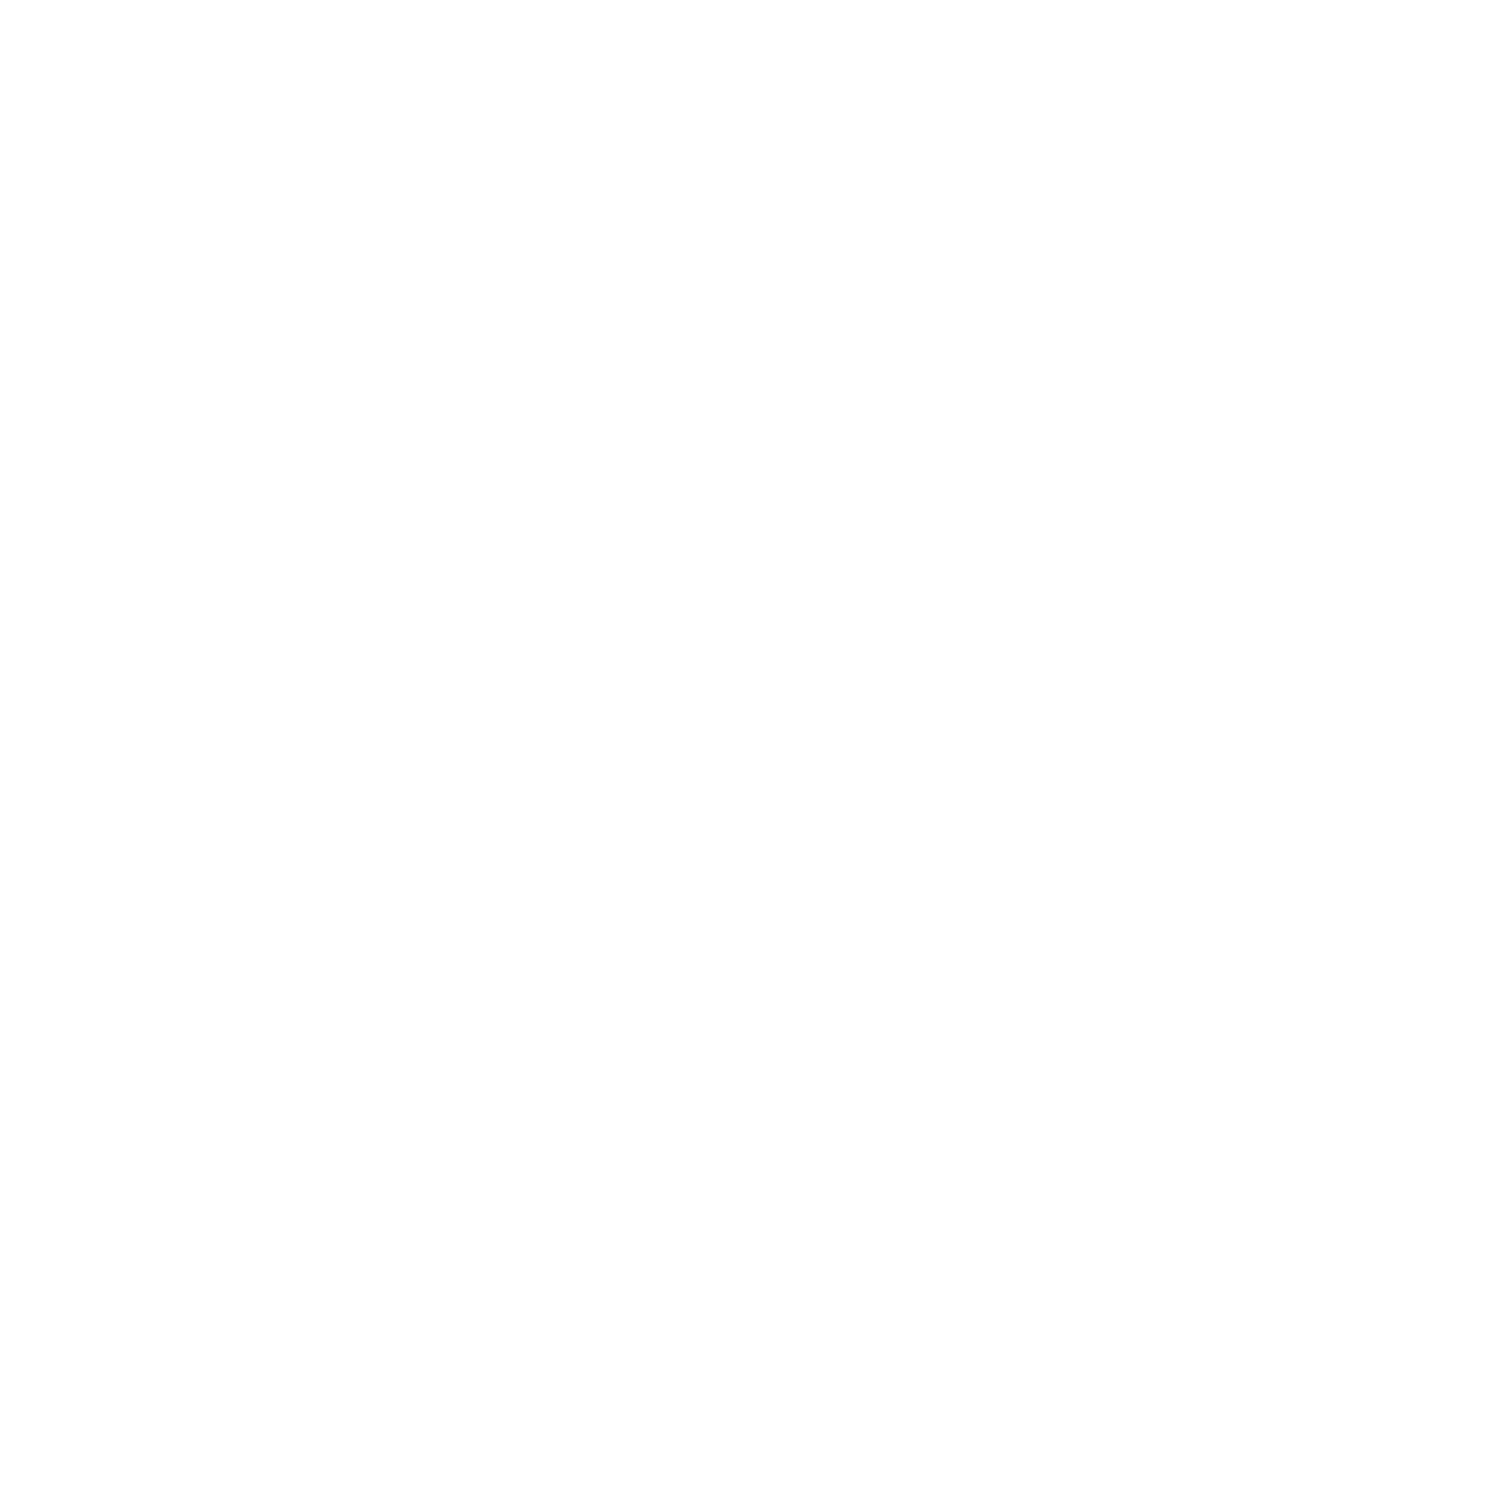 MARTELL DB MUSIC